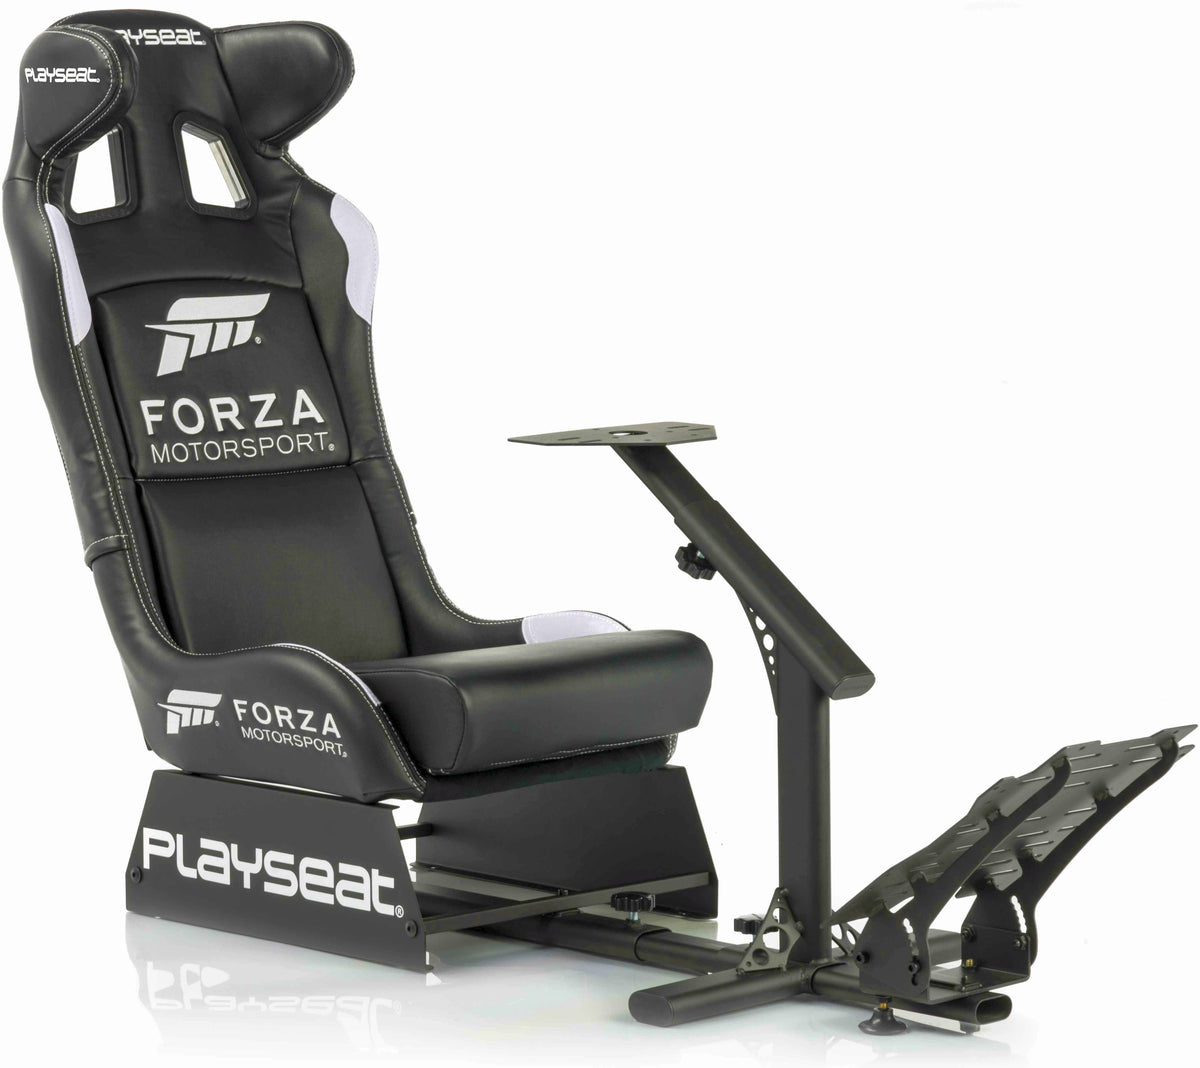 Playseat® Forza Motorsport